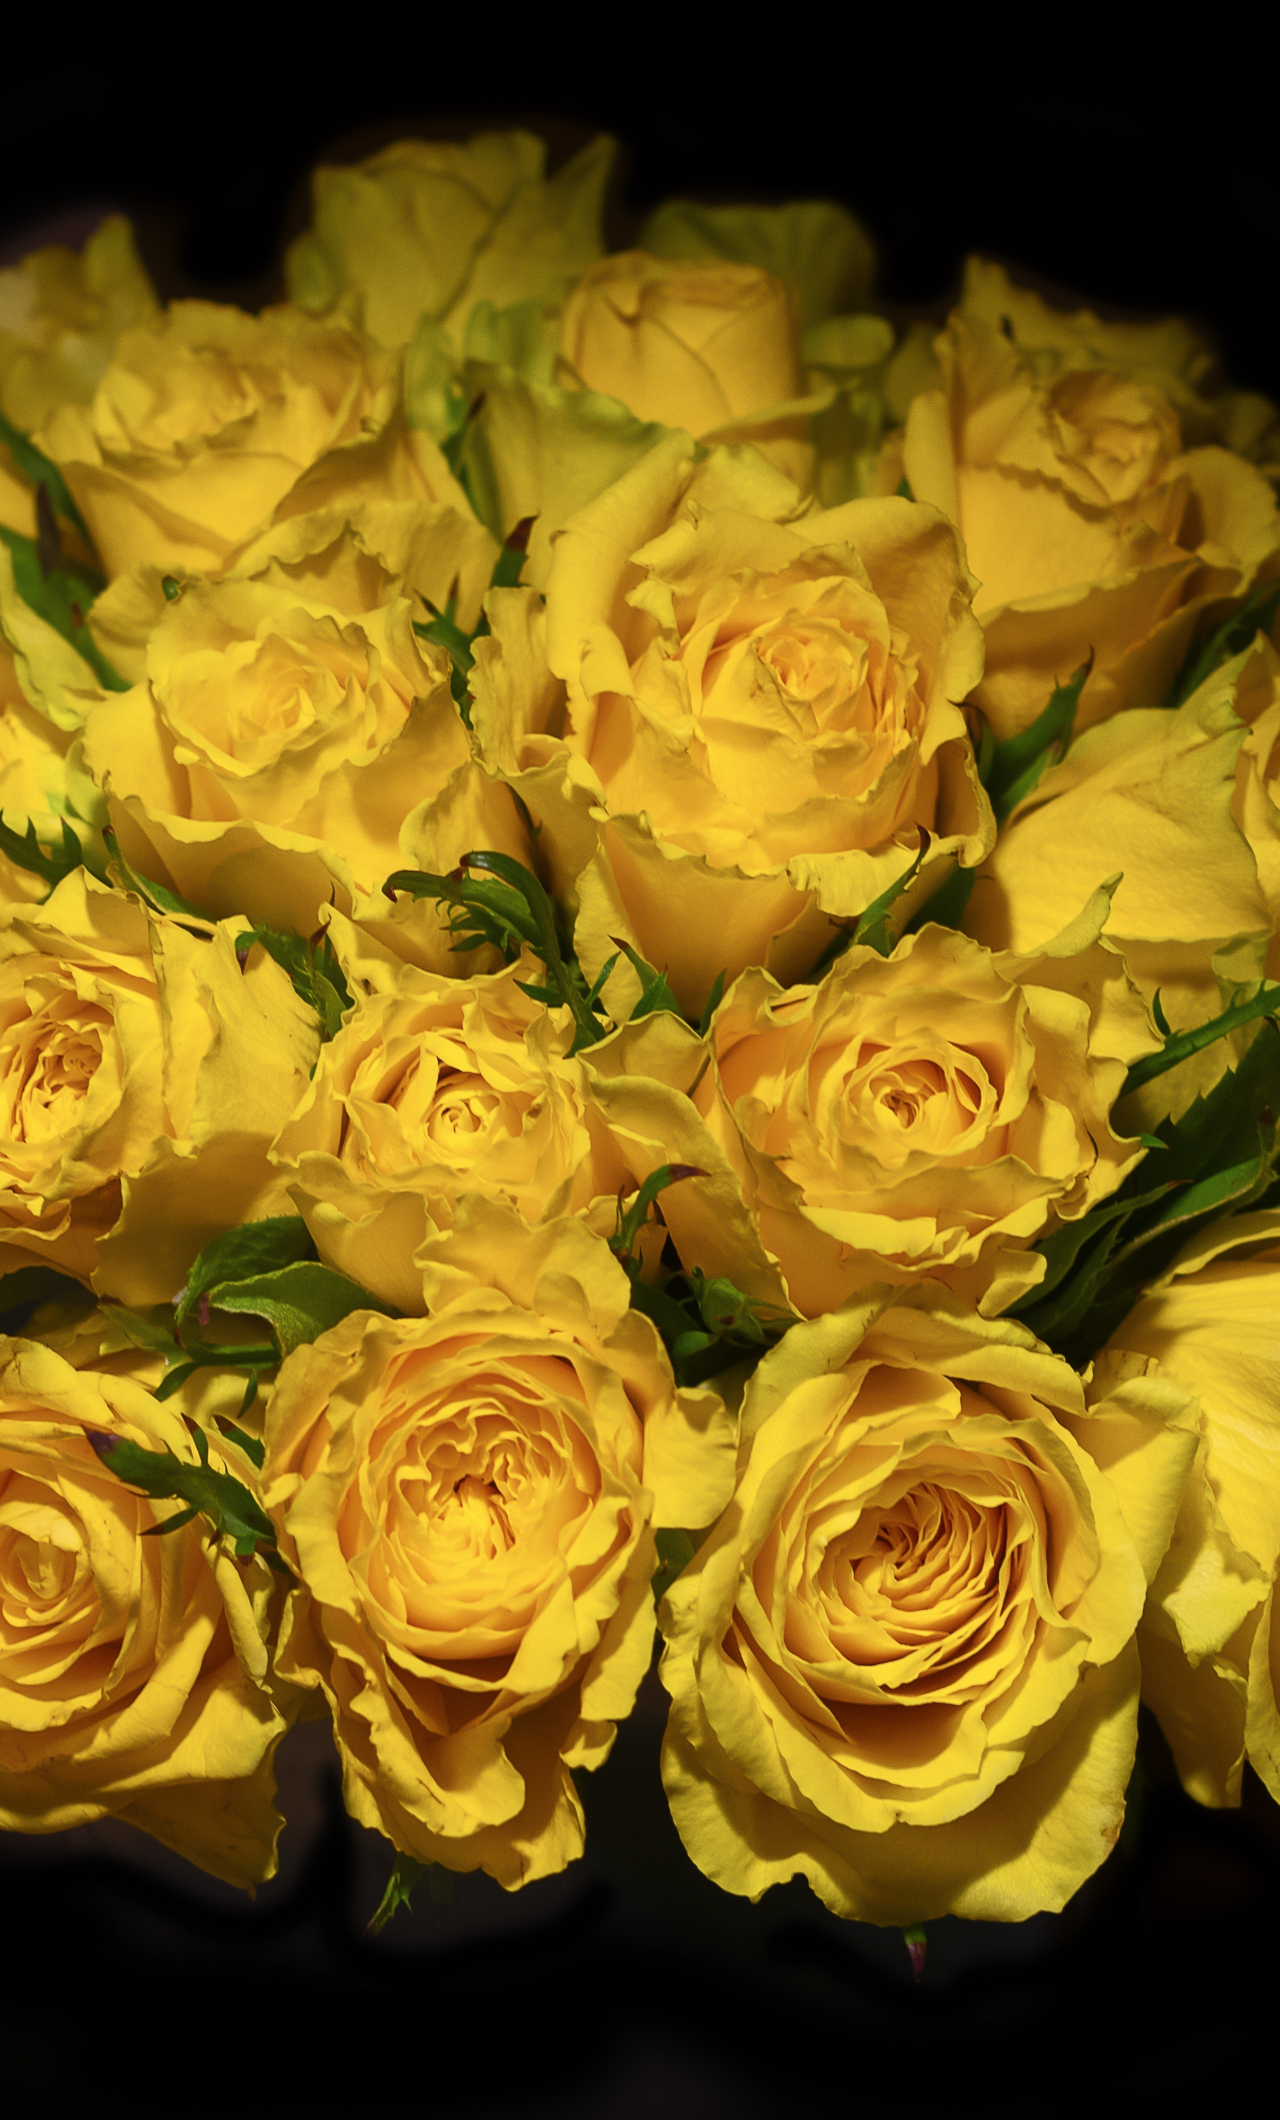 Download wallpaper 1280x2120 yellow roses, portrait, bouquet, iphone 6  plus, 1280x2120 hd background, 9249